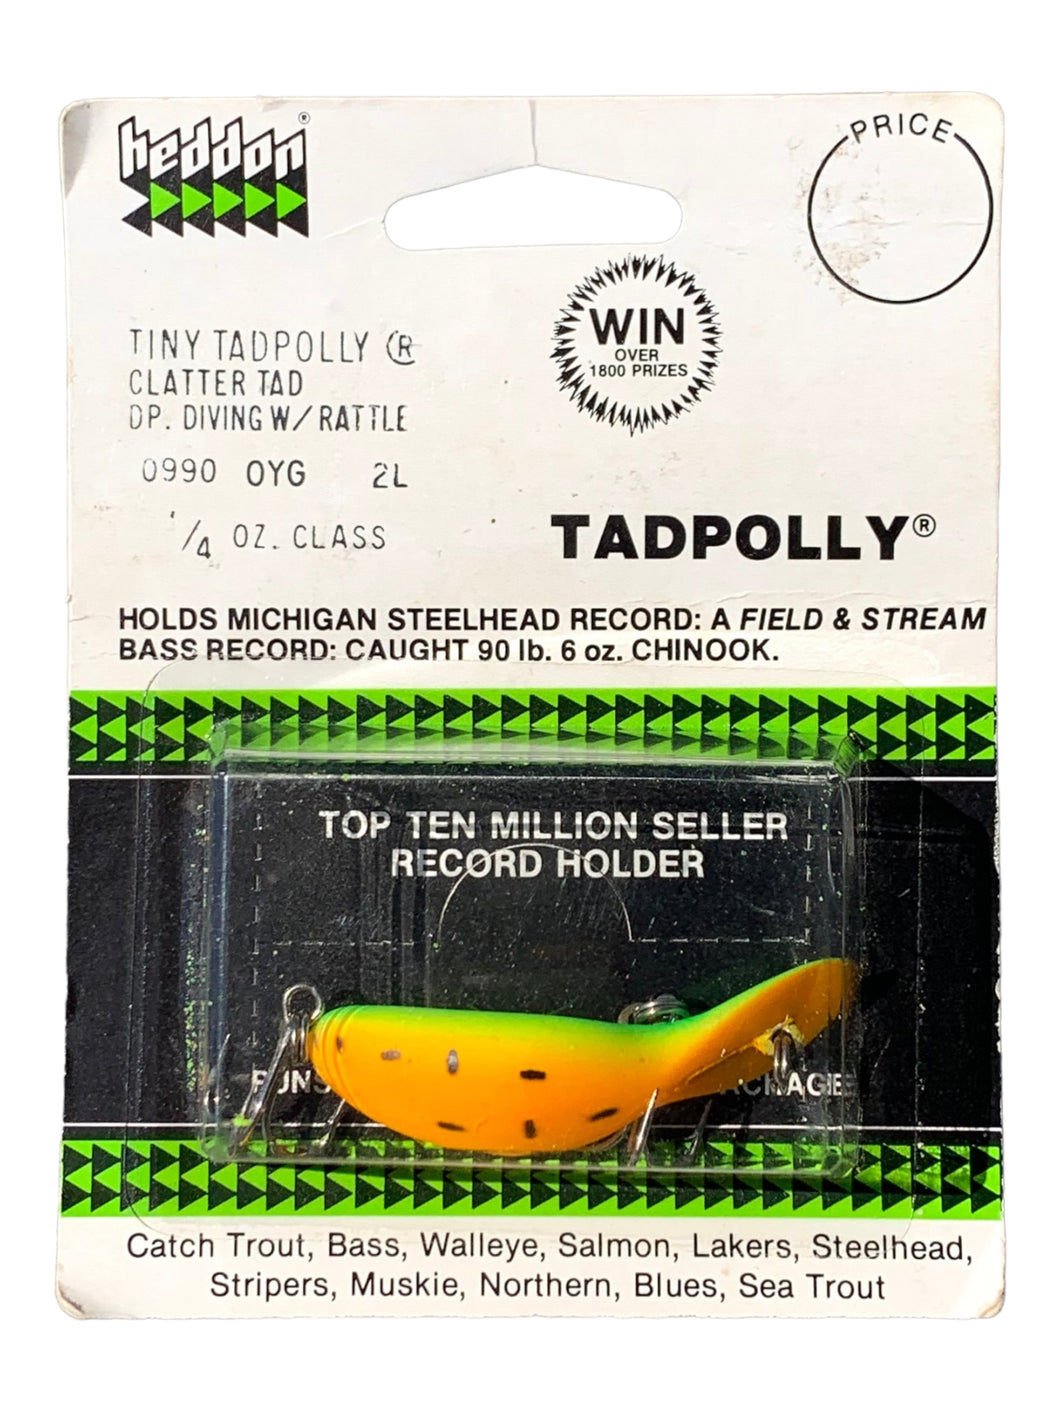 HEDDON TINY TADPOLLY CLATTER TAD 1/4 oz Fishing Lure • 0990 OYG ORANGE CRAPPIE CHUB